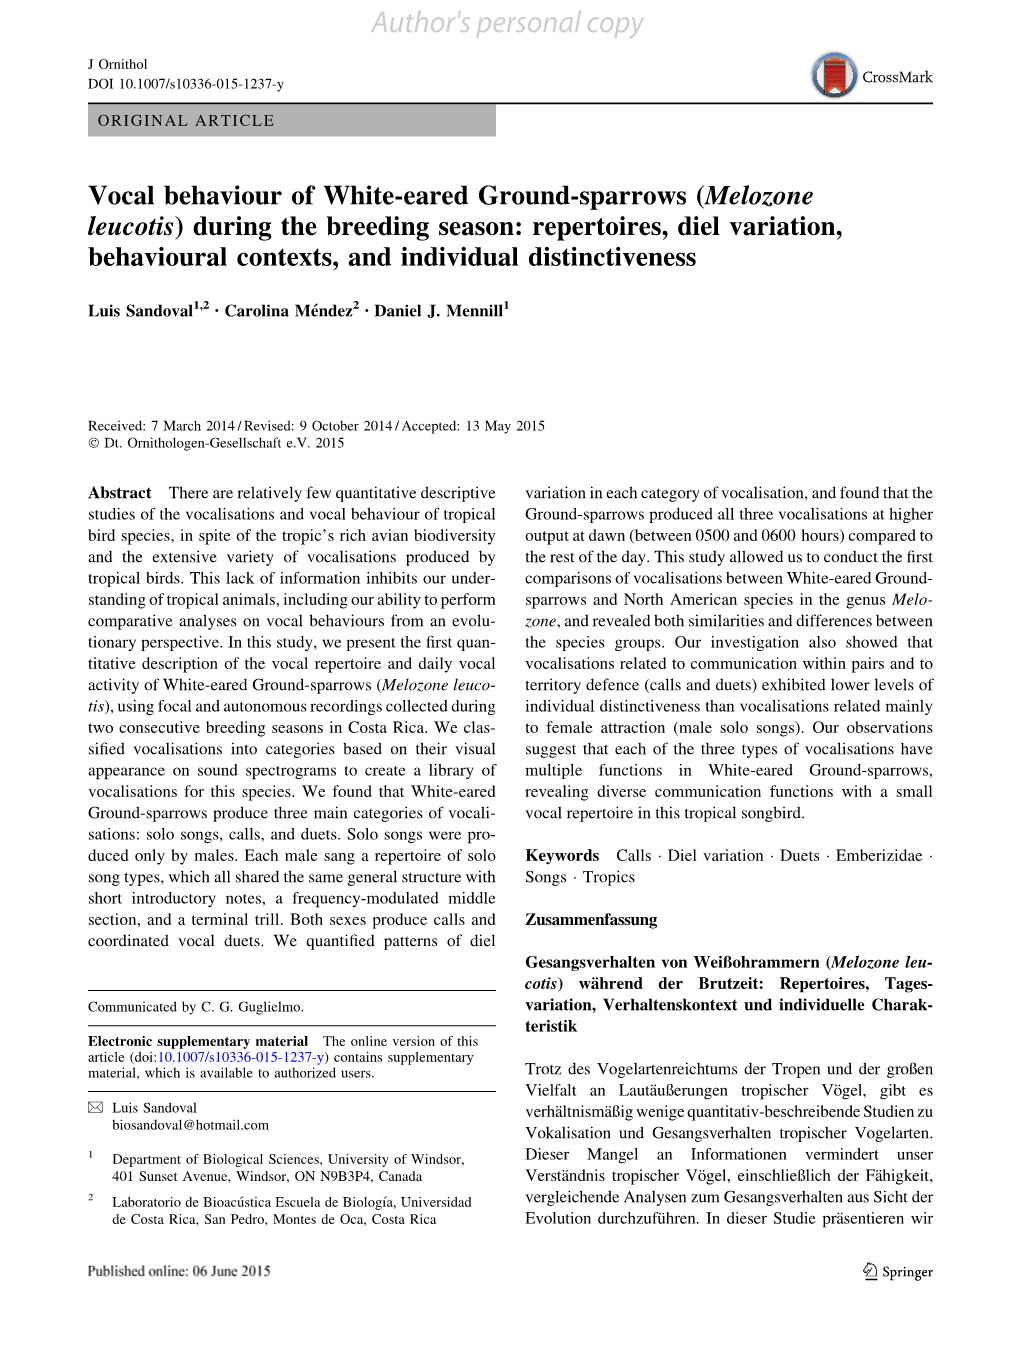 Vocal Behaviour of White-Eared Ground-Sparrows (Melozone Leucotis) During the Breeding Season: Repertoires, Diel Variation, Beha